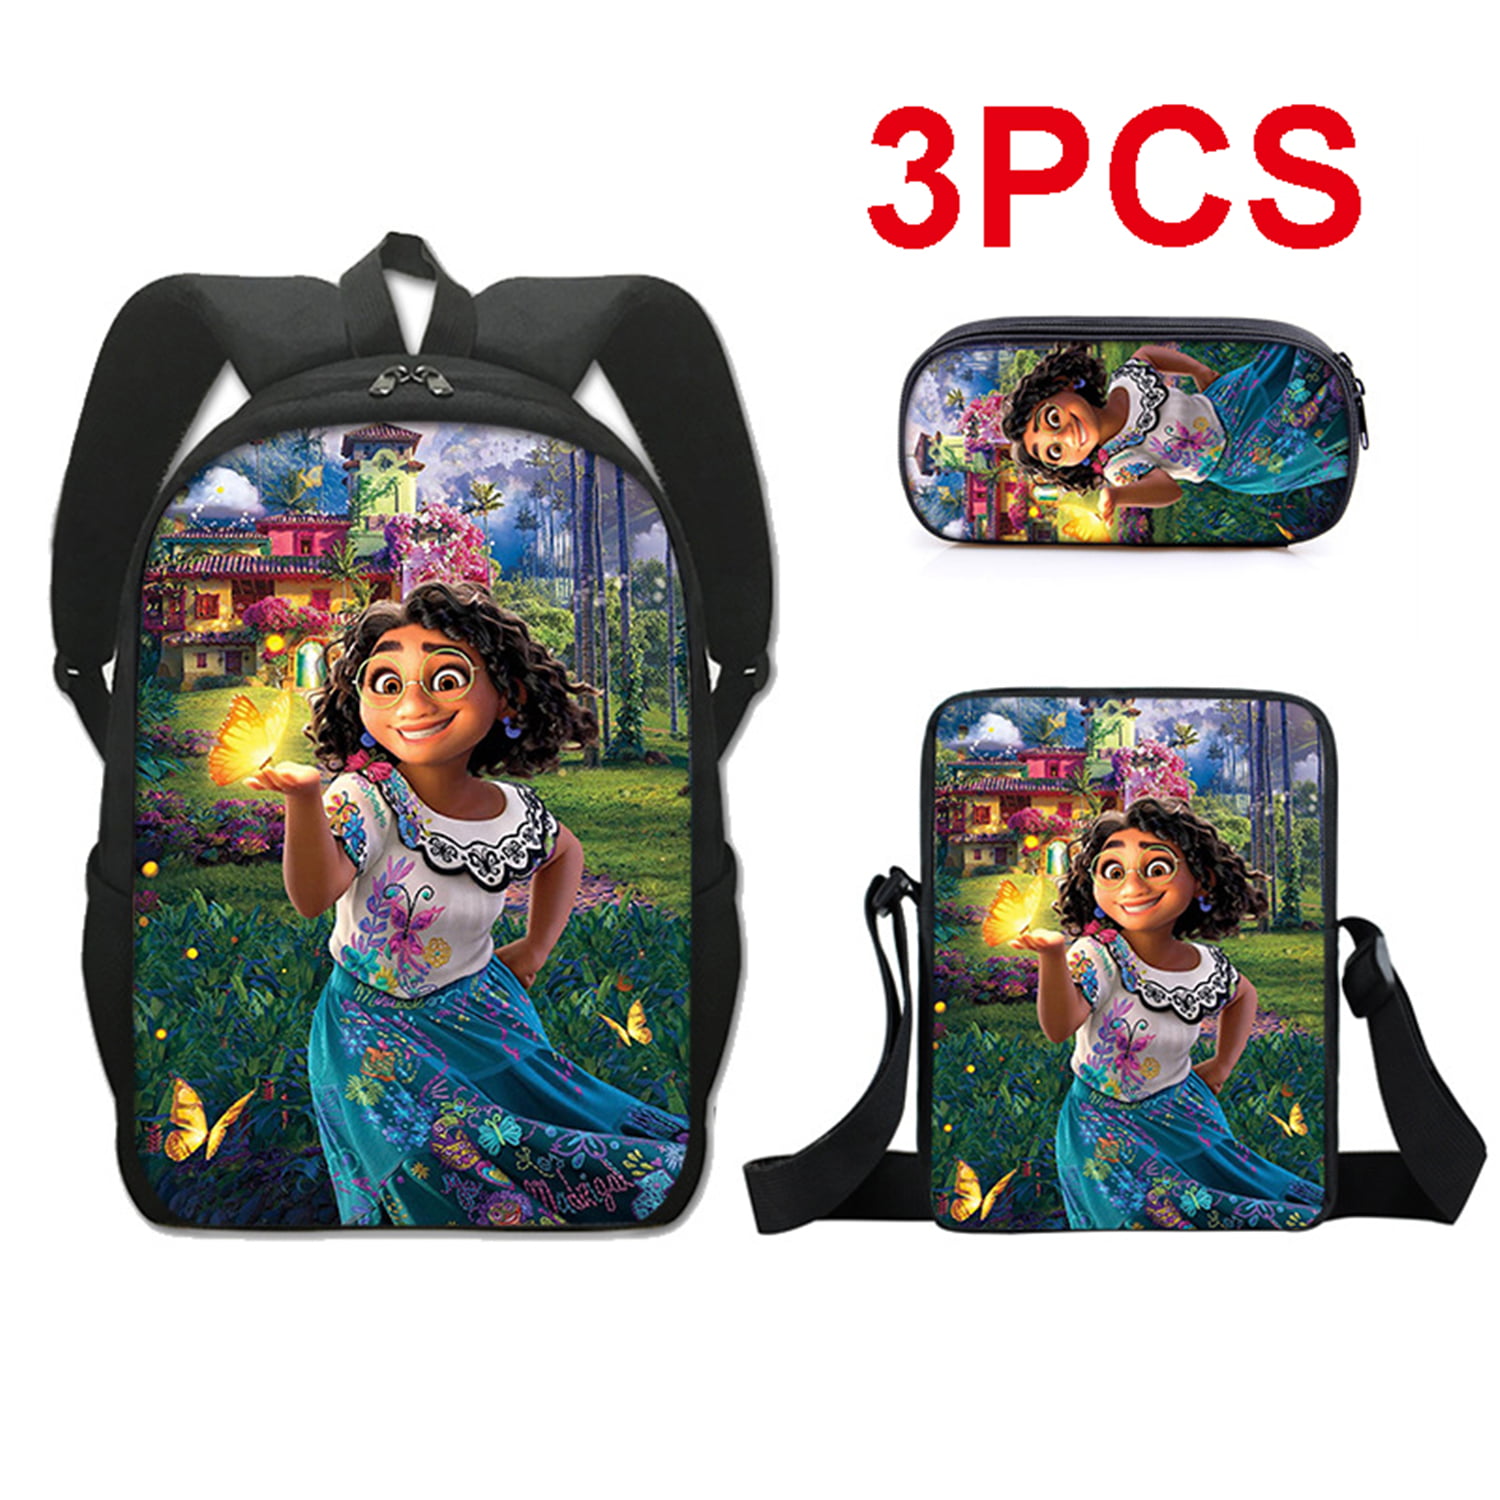 Fortnite Backpack Laptop Daypacks SchoolBag Set with Pencil Case Lunch Bag 3 Pieces Set for Teens Kids Boys Girls 